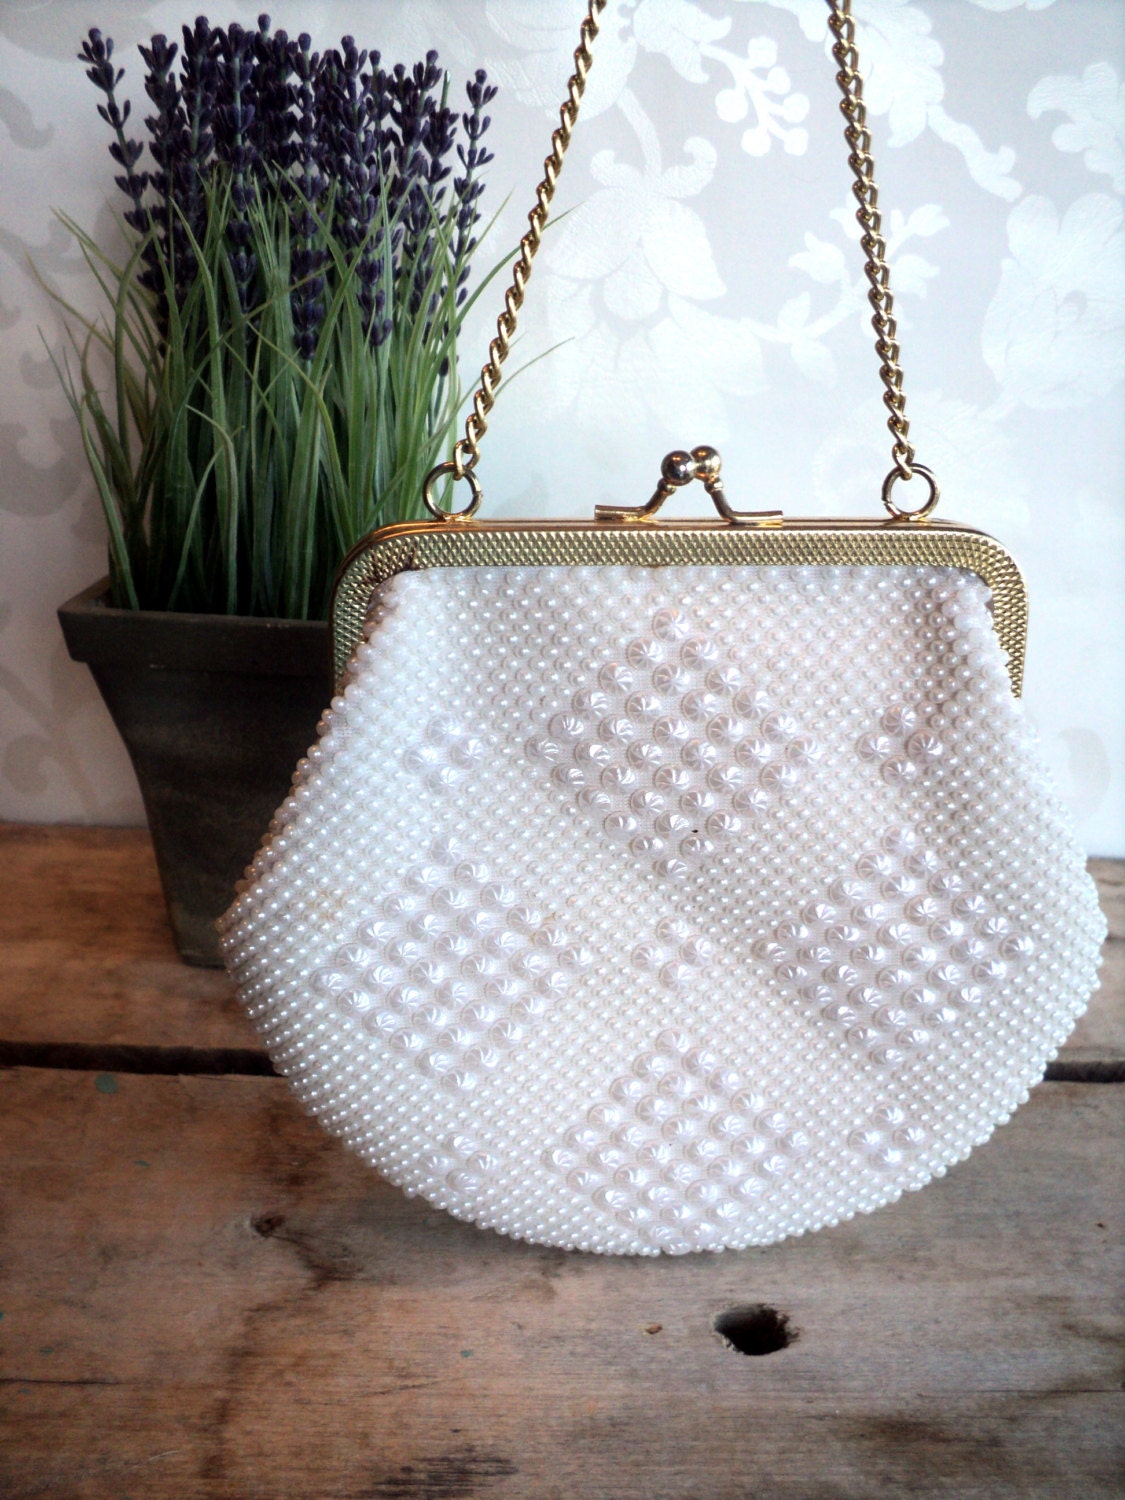 White beaded clutch purse kiss lock handbag with gold